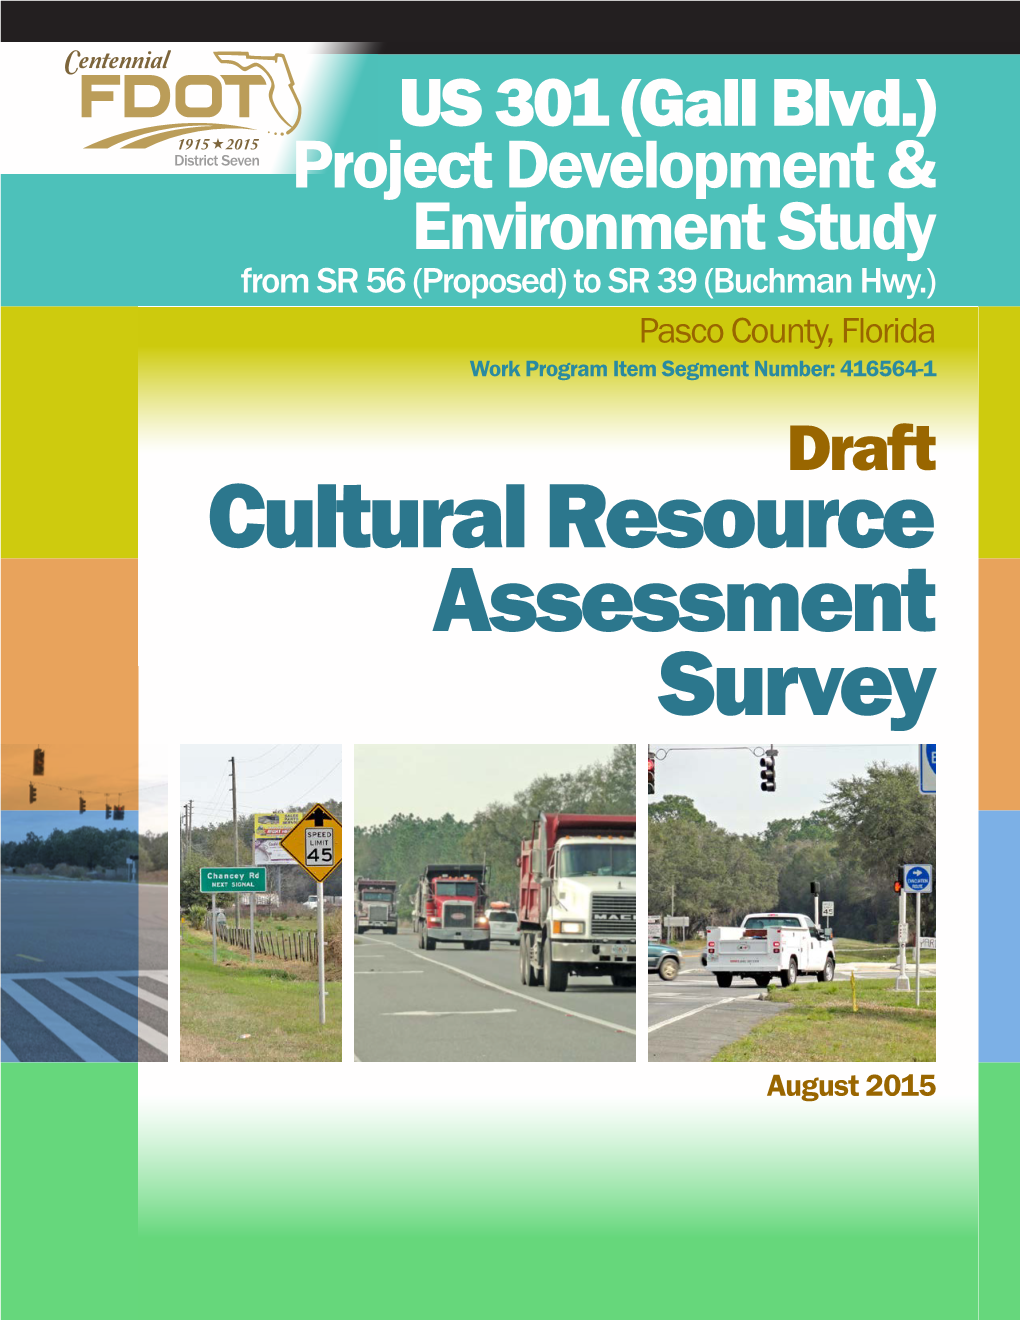 Cultural Resource Assessment Survey (Draft)